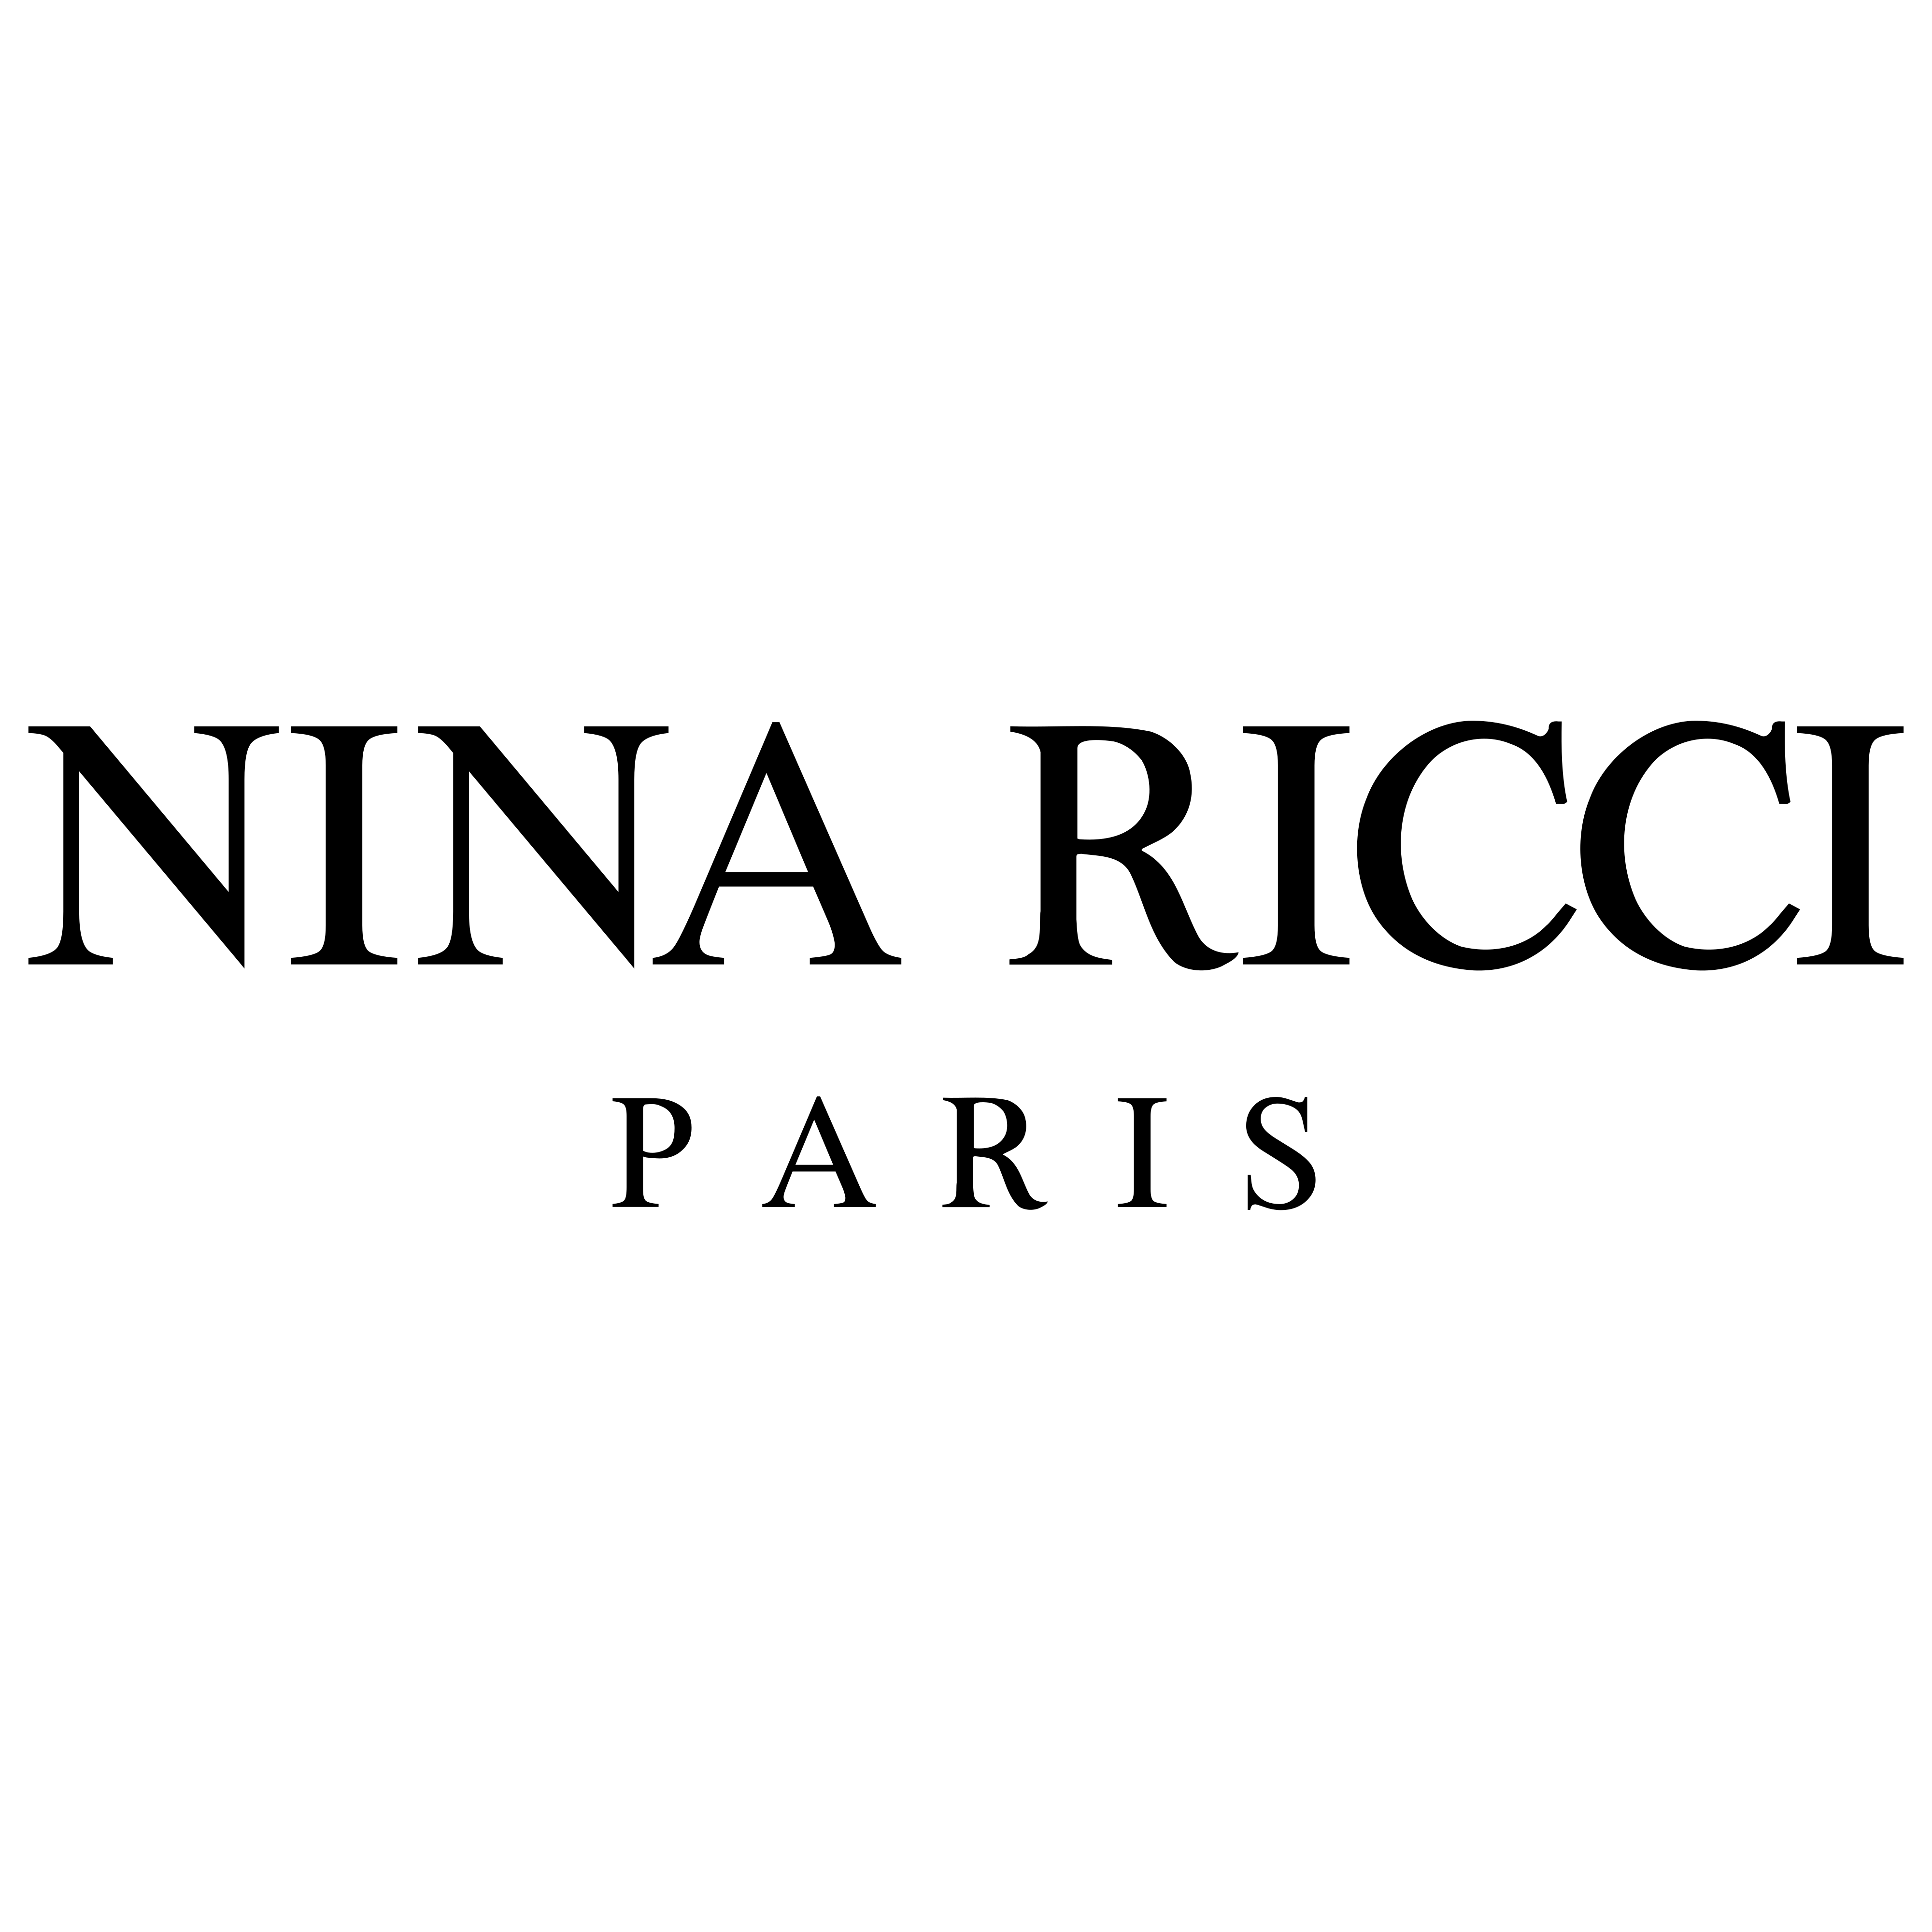 Nina Ricci Paris logo - download.